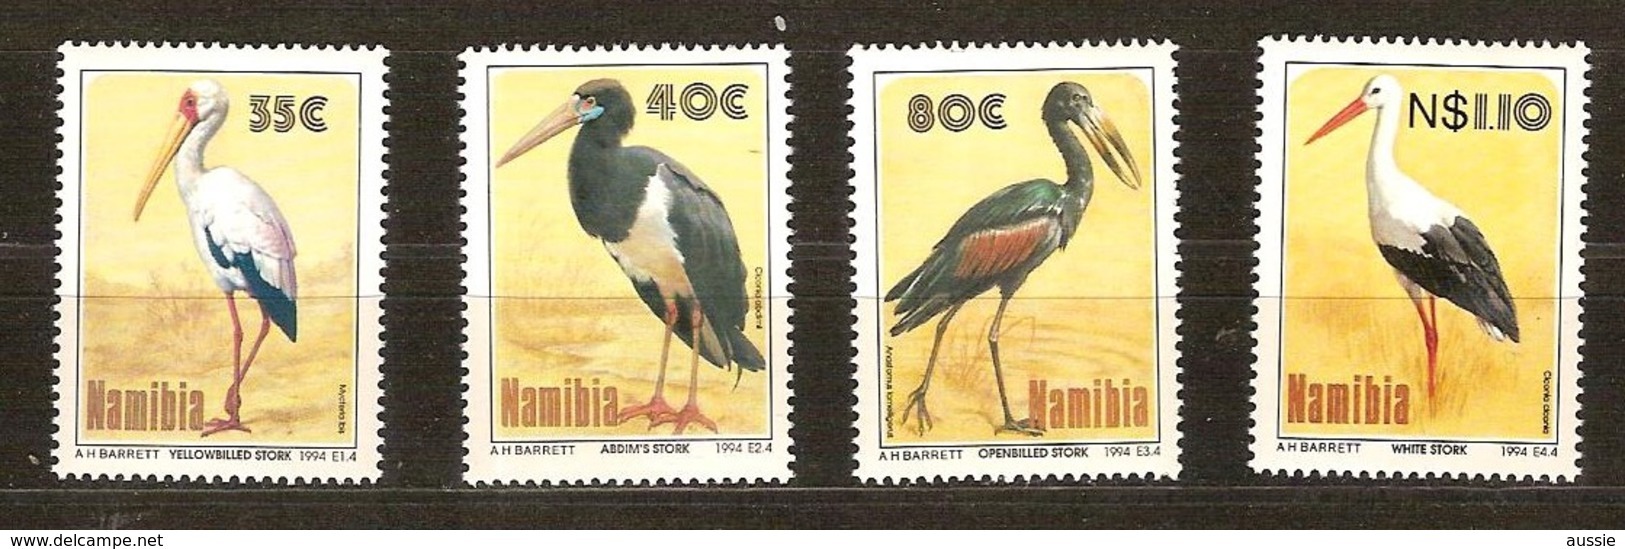 Namibia Namibie 1994 Yvertnr 732-735 *** MNH Cote 20 FF Faune Oiseaux Vogels Birds - Namibia (1990- ...)